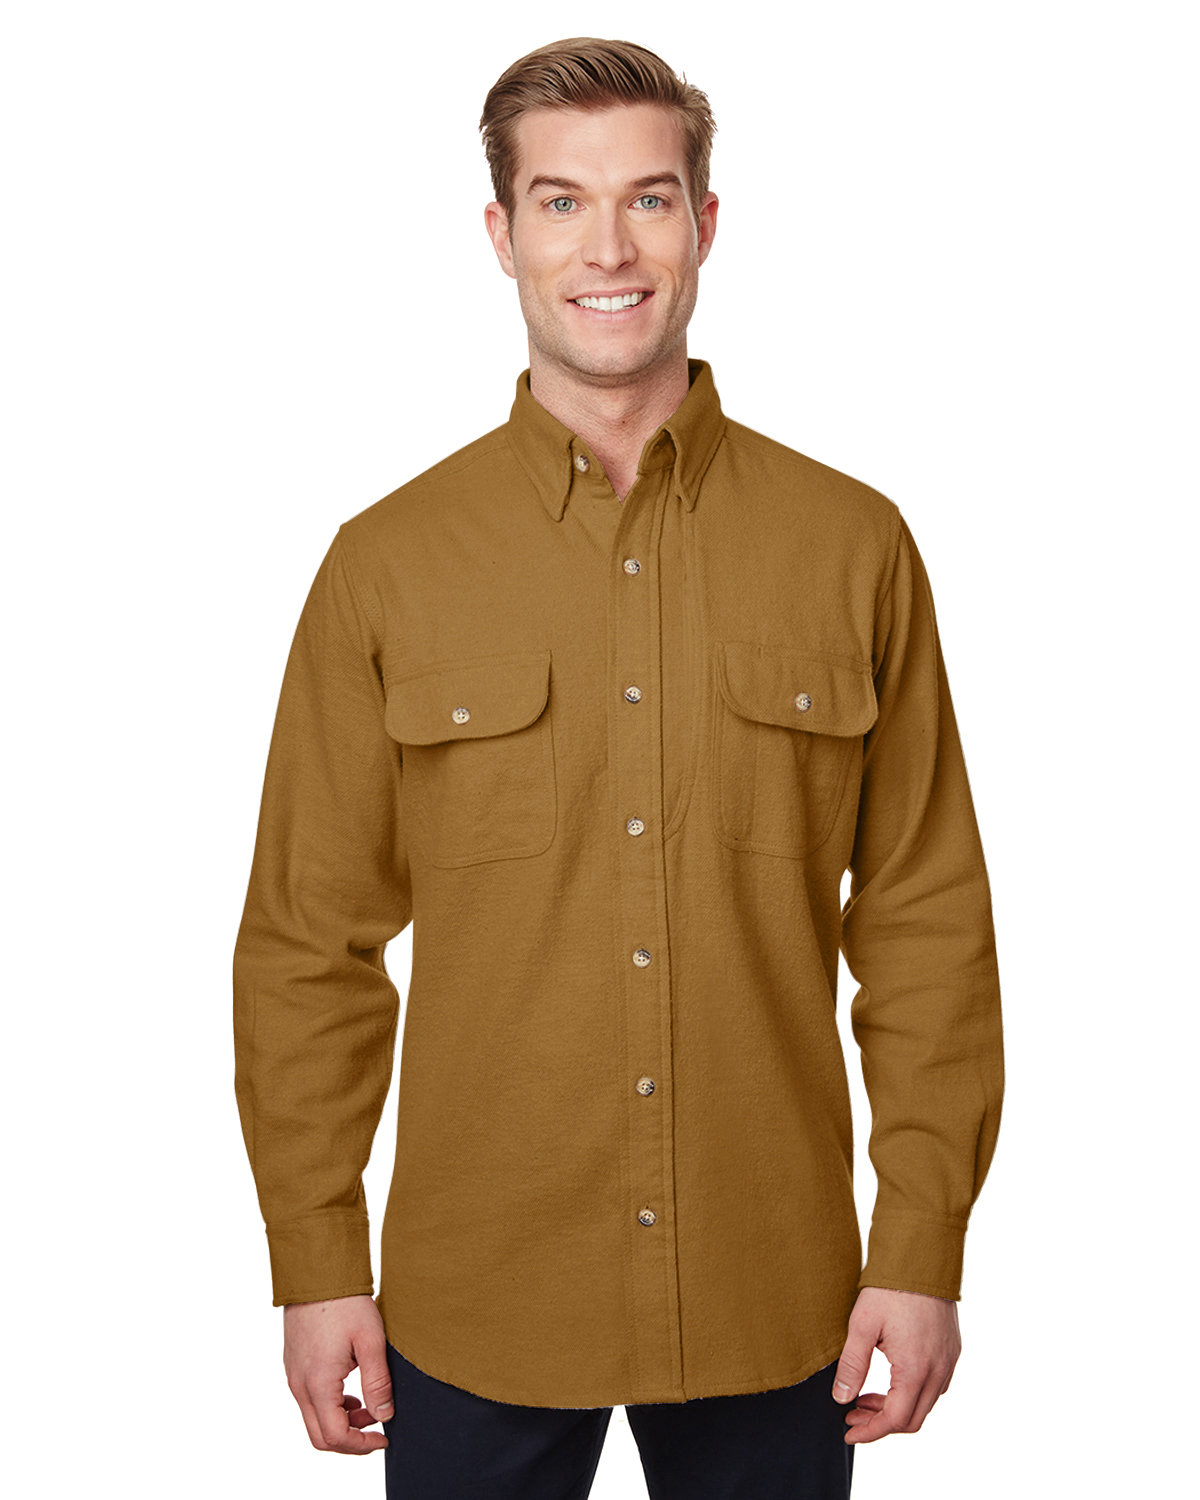 men's chamois shirts for sale - Brett Ulrich